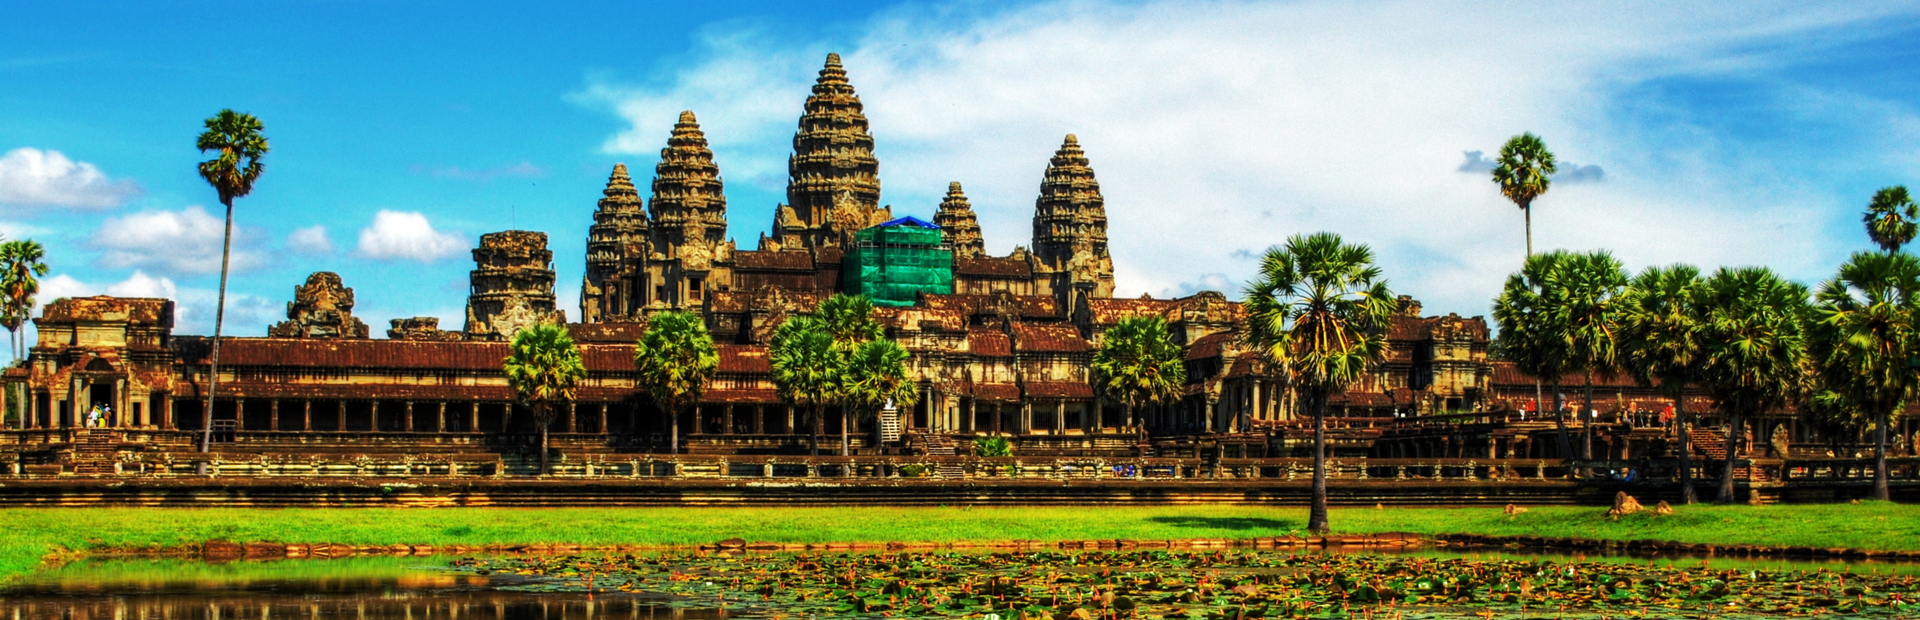 Cambodia_Tour_1920x620